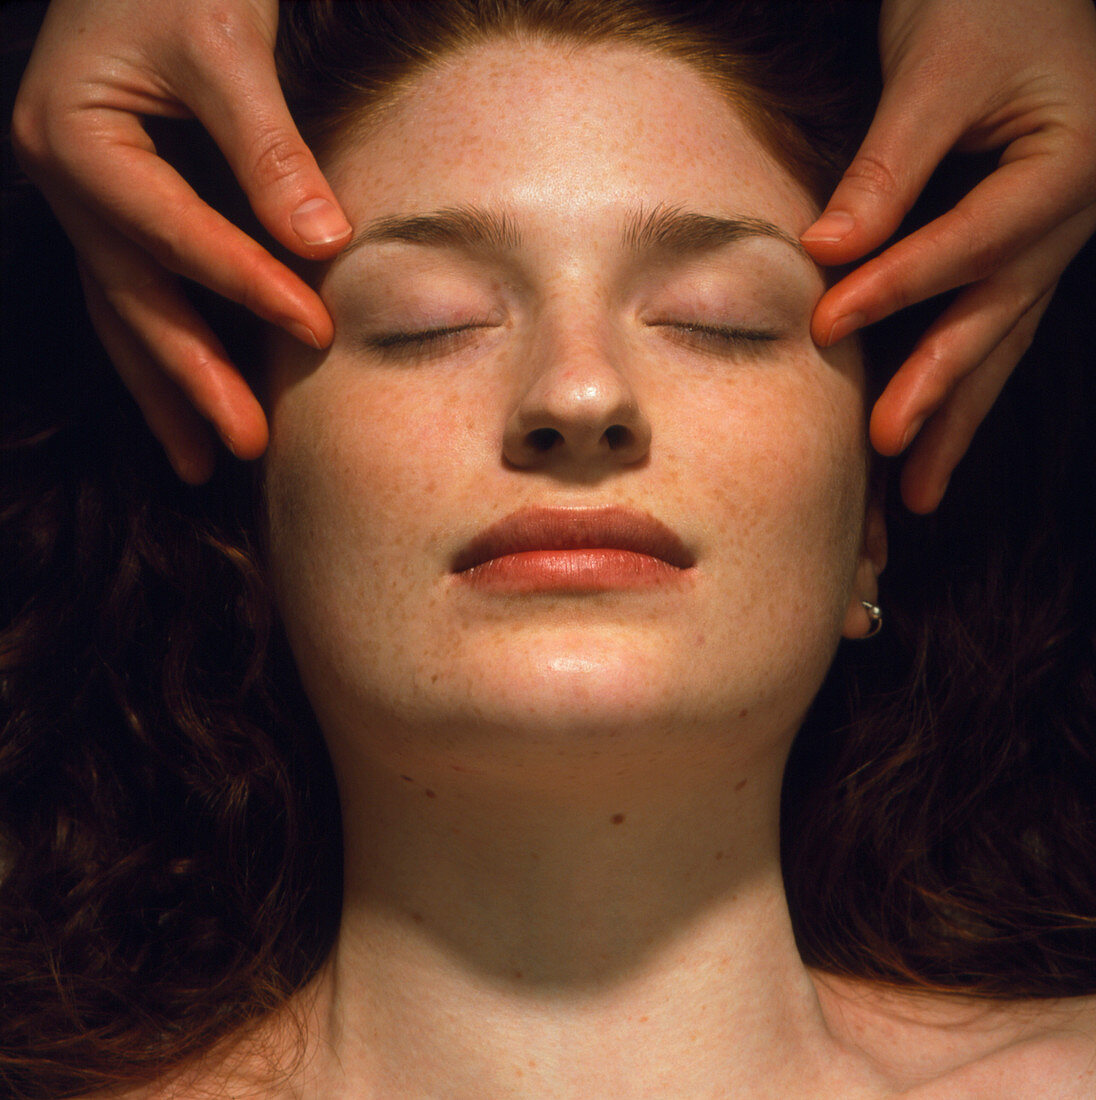 Woman receives a facial massage